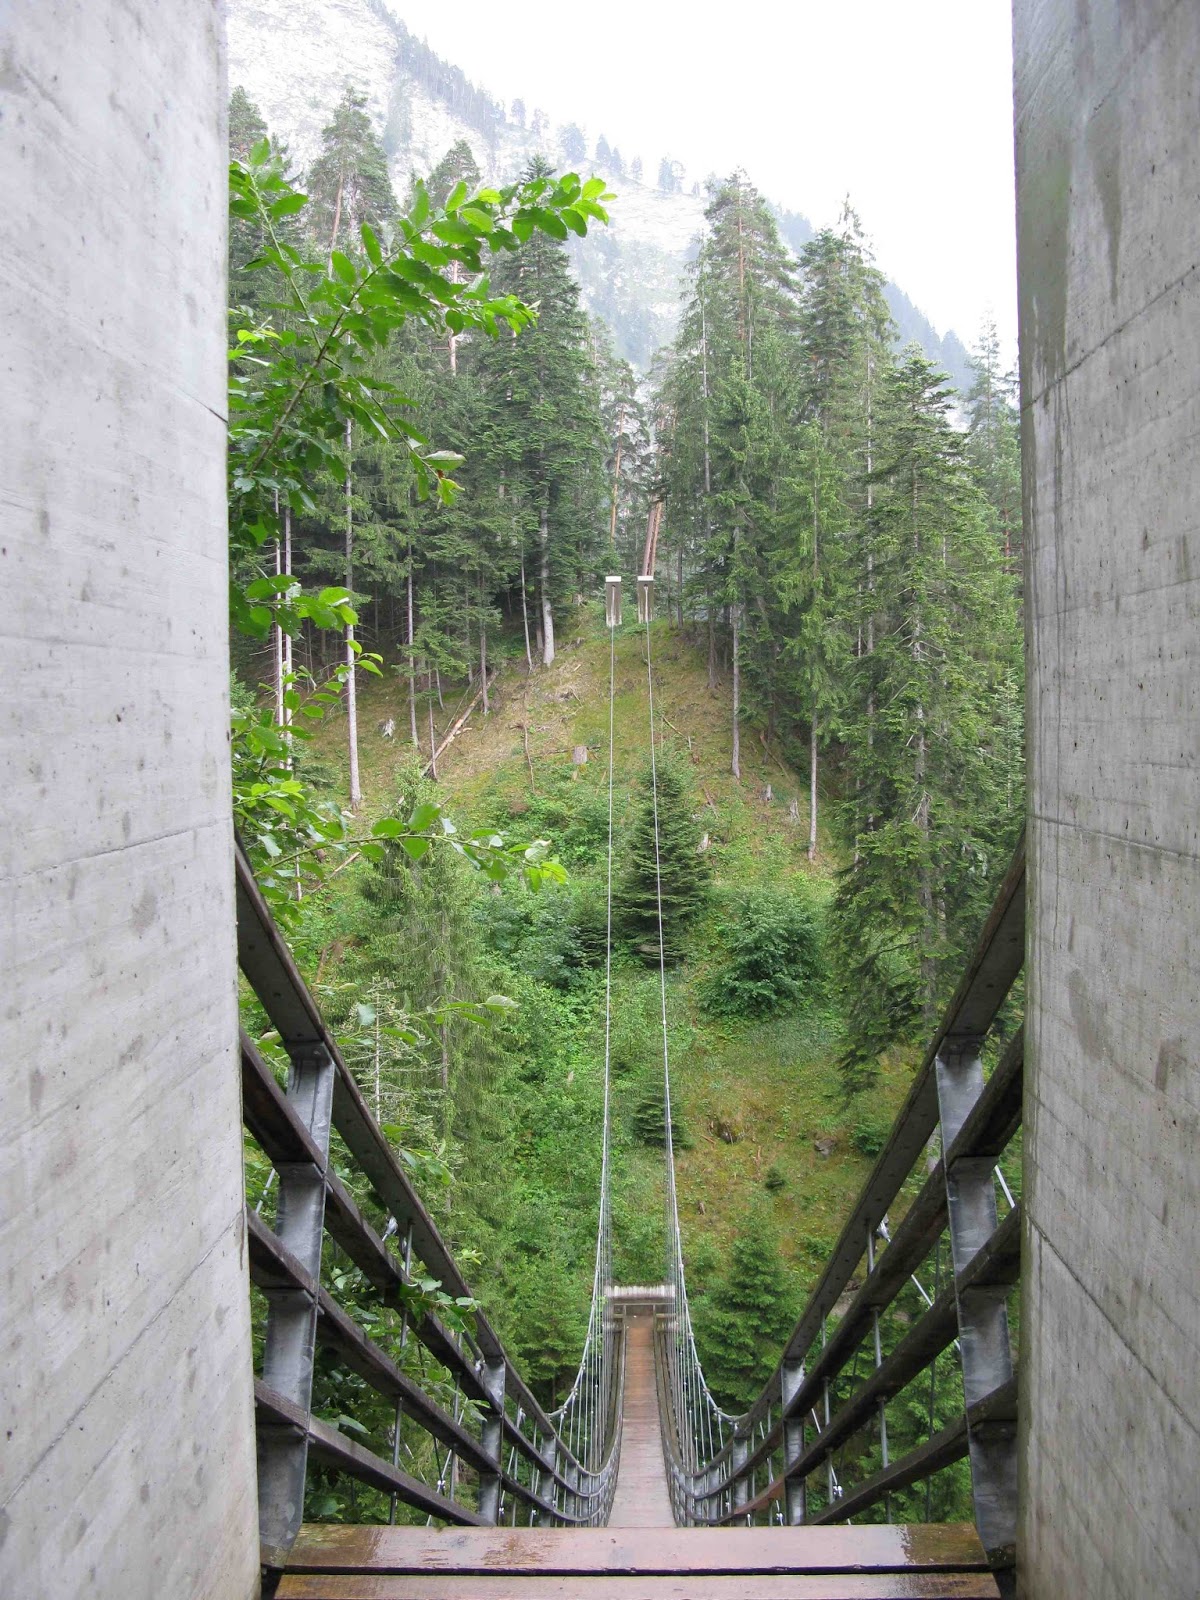 Design of a Stress Ribbon Glulam Footbridge Across a Steep Forest